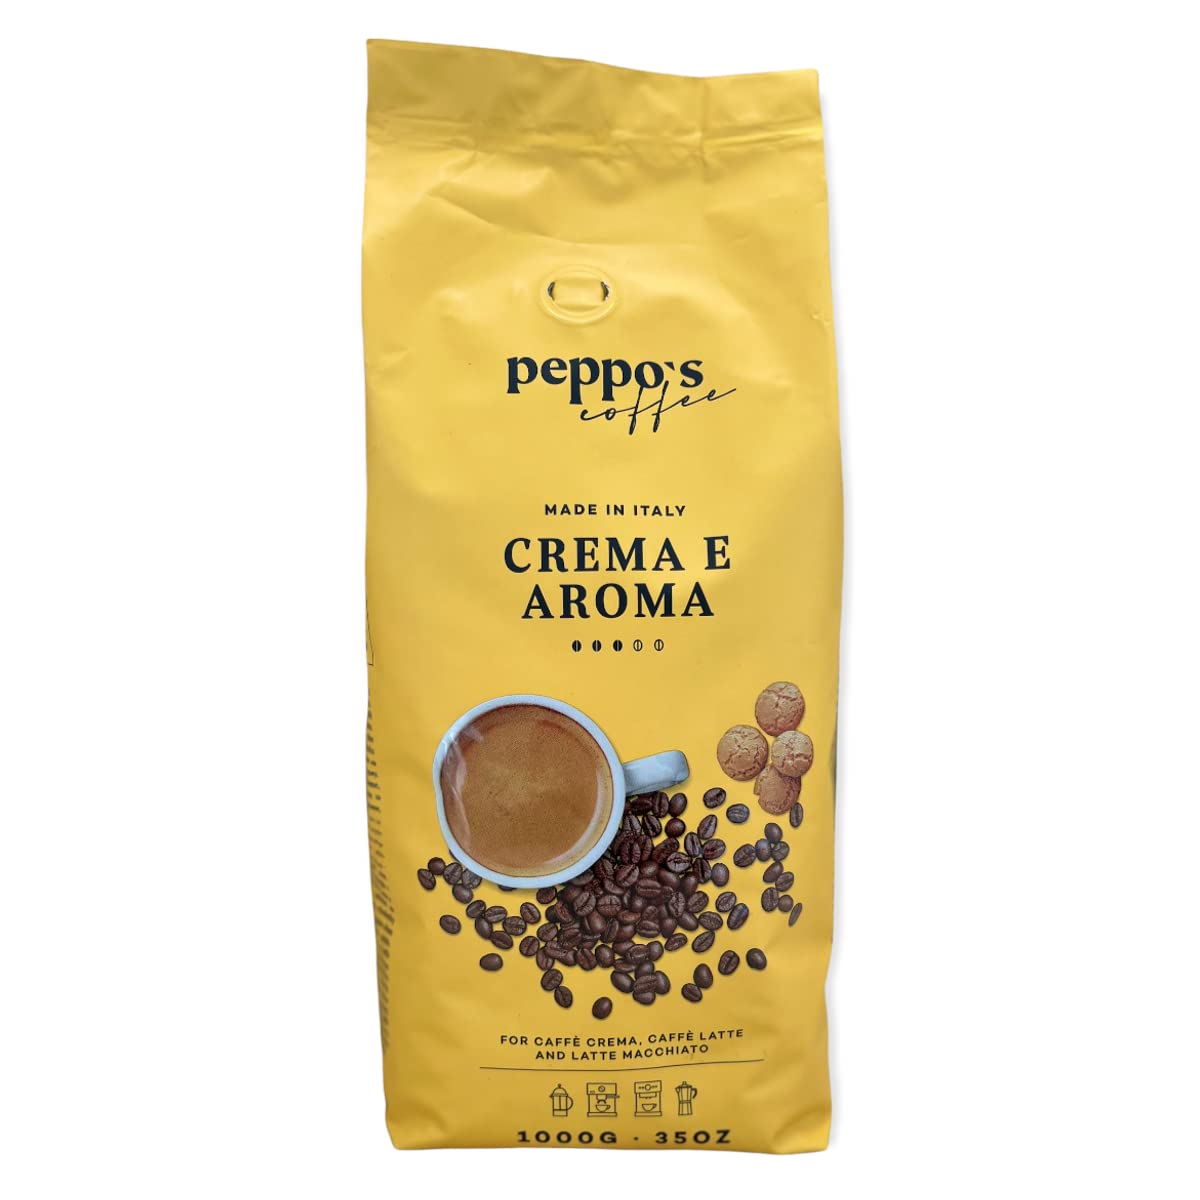 peppo's coffee - 1x1KG CREMA E AROMA - Coffee from Italy - Whole coffee beans roasted - Medium roast - Low acidity